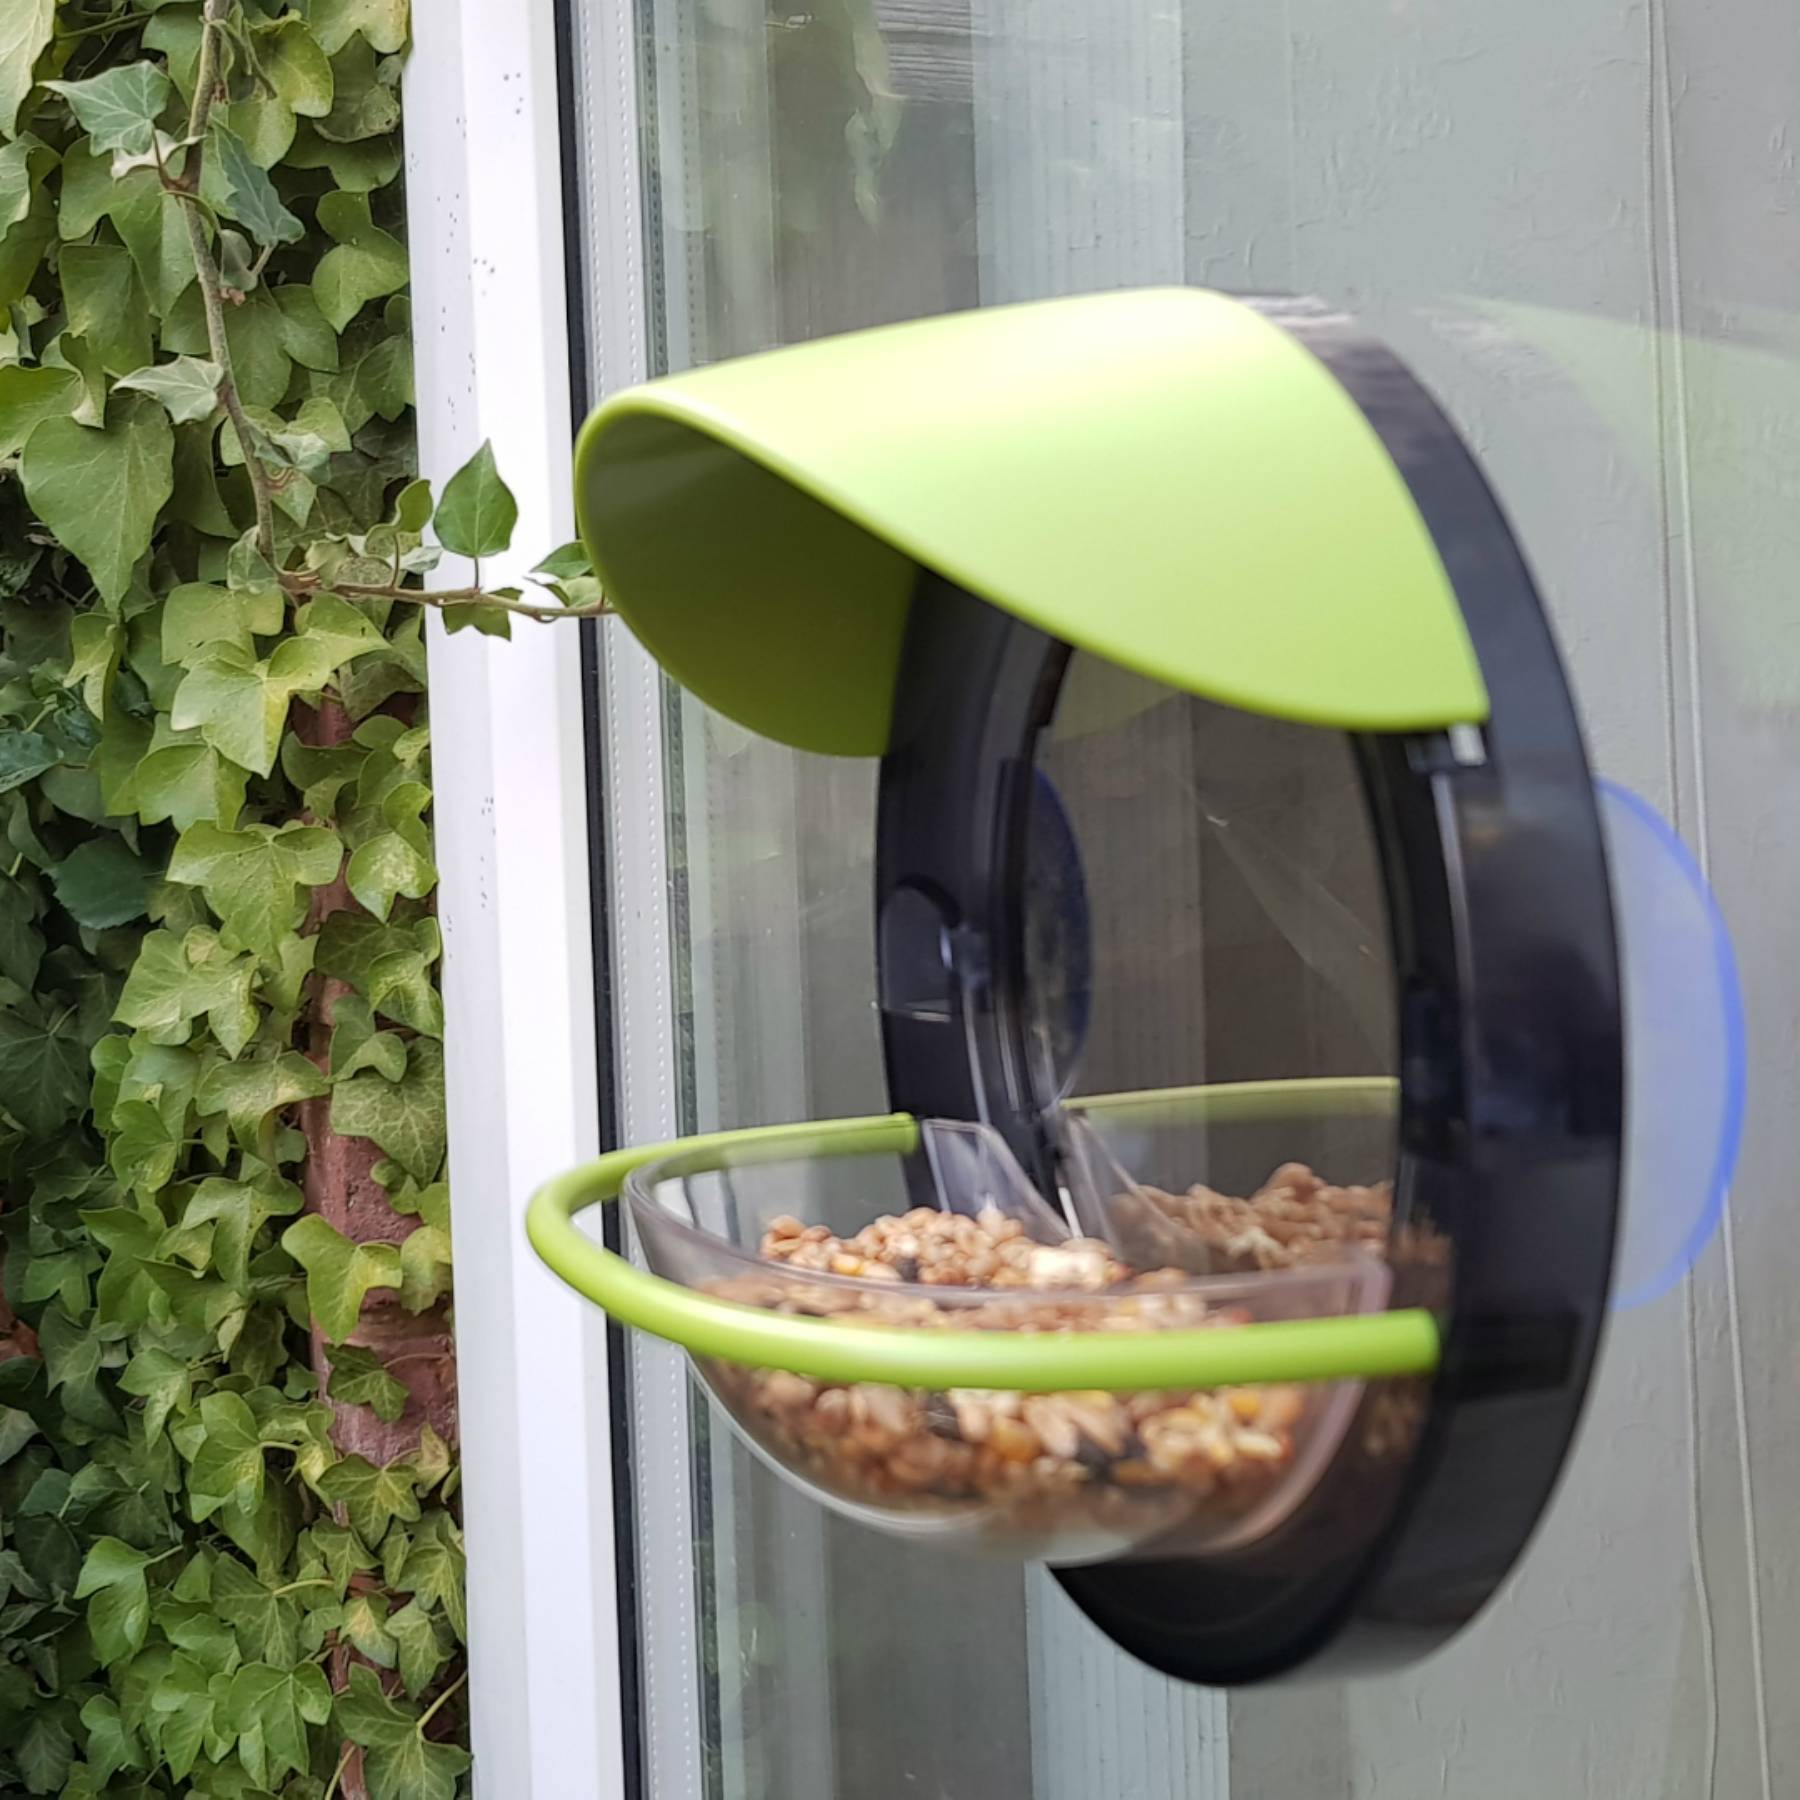 My living world window bird feeder